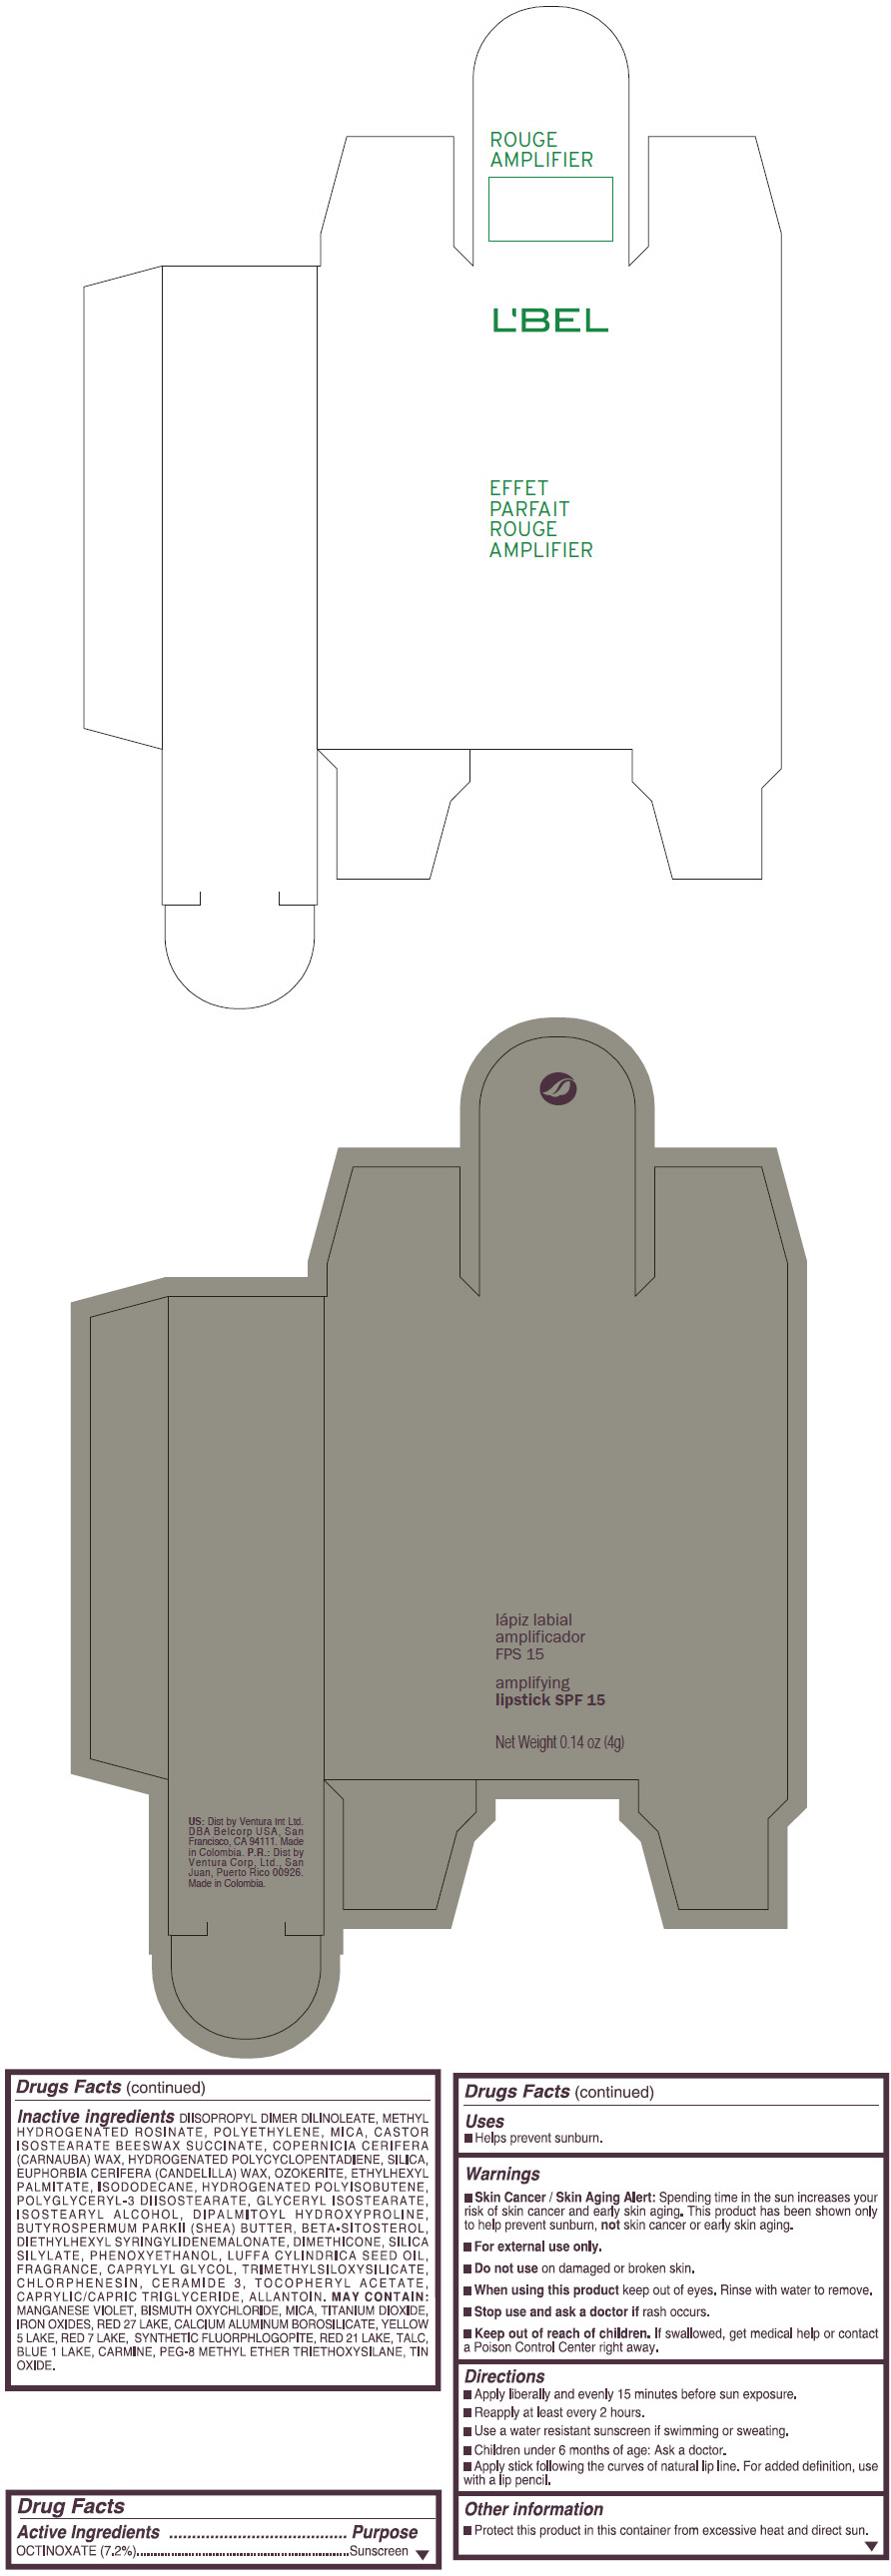 PRINCIPAL DISPLAY PANEL - 4 g Tube Box - (BELLE NUDE) - BEIGE